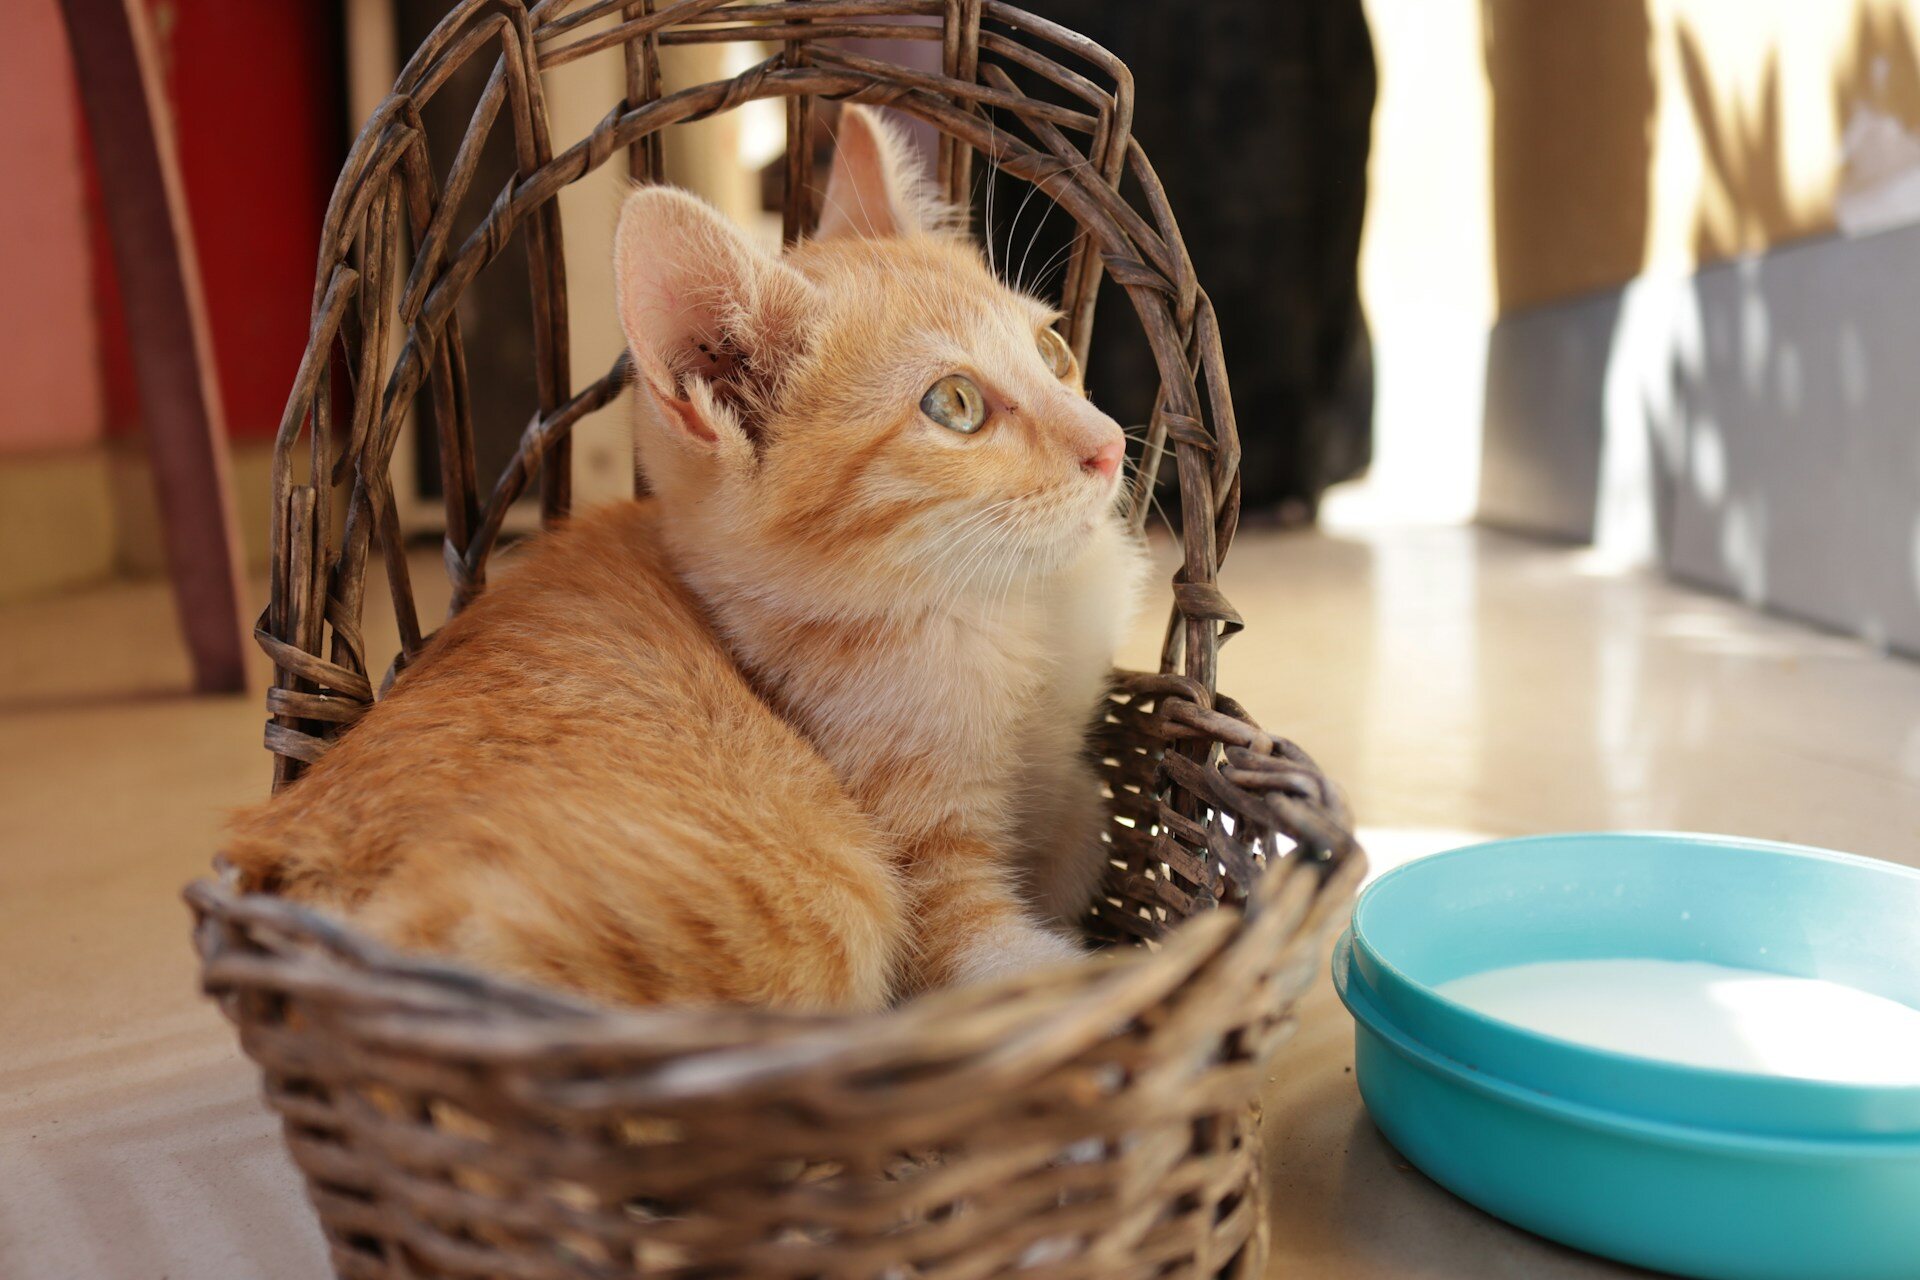 An orange cat sitting in a wicker basket next to a bowl of milk